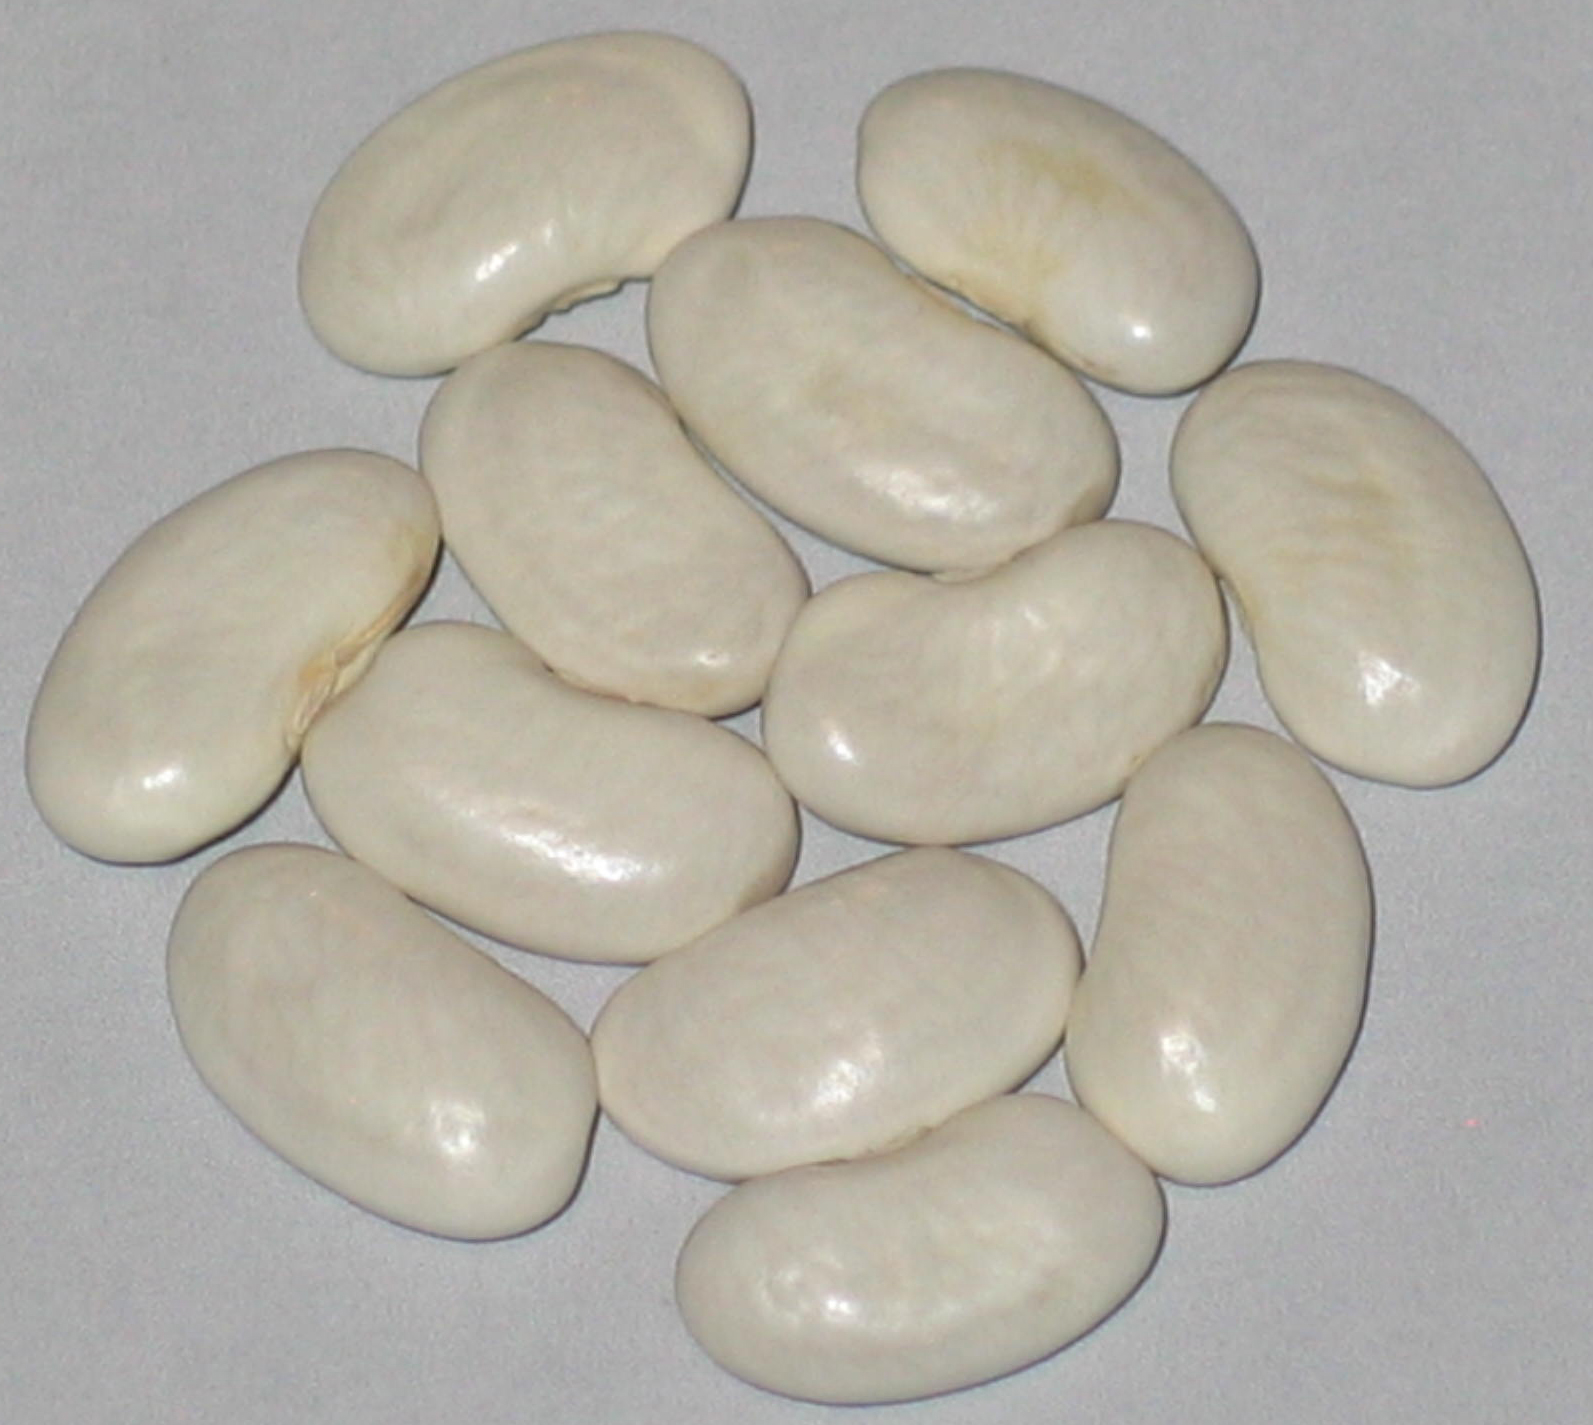 image of Harvey's White Haricot beans